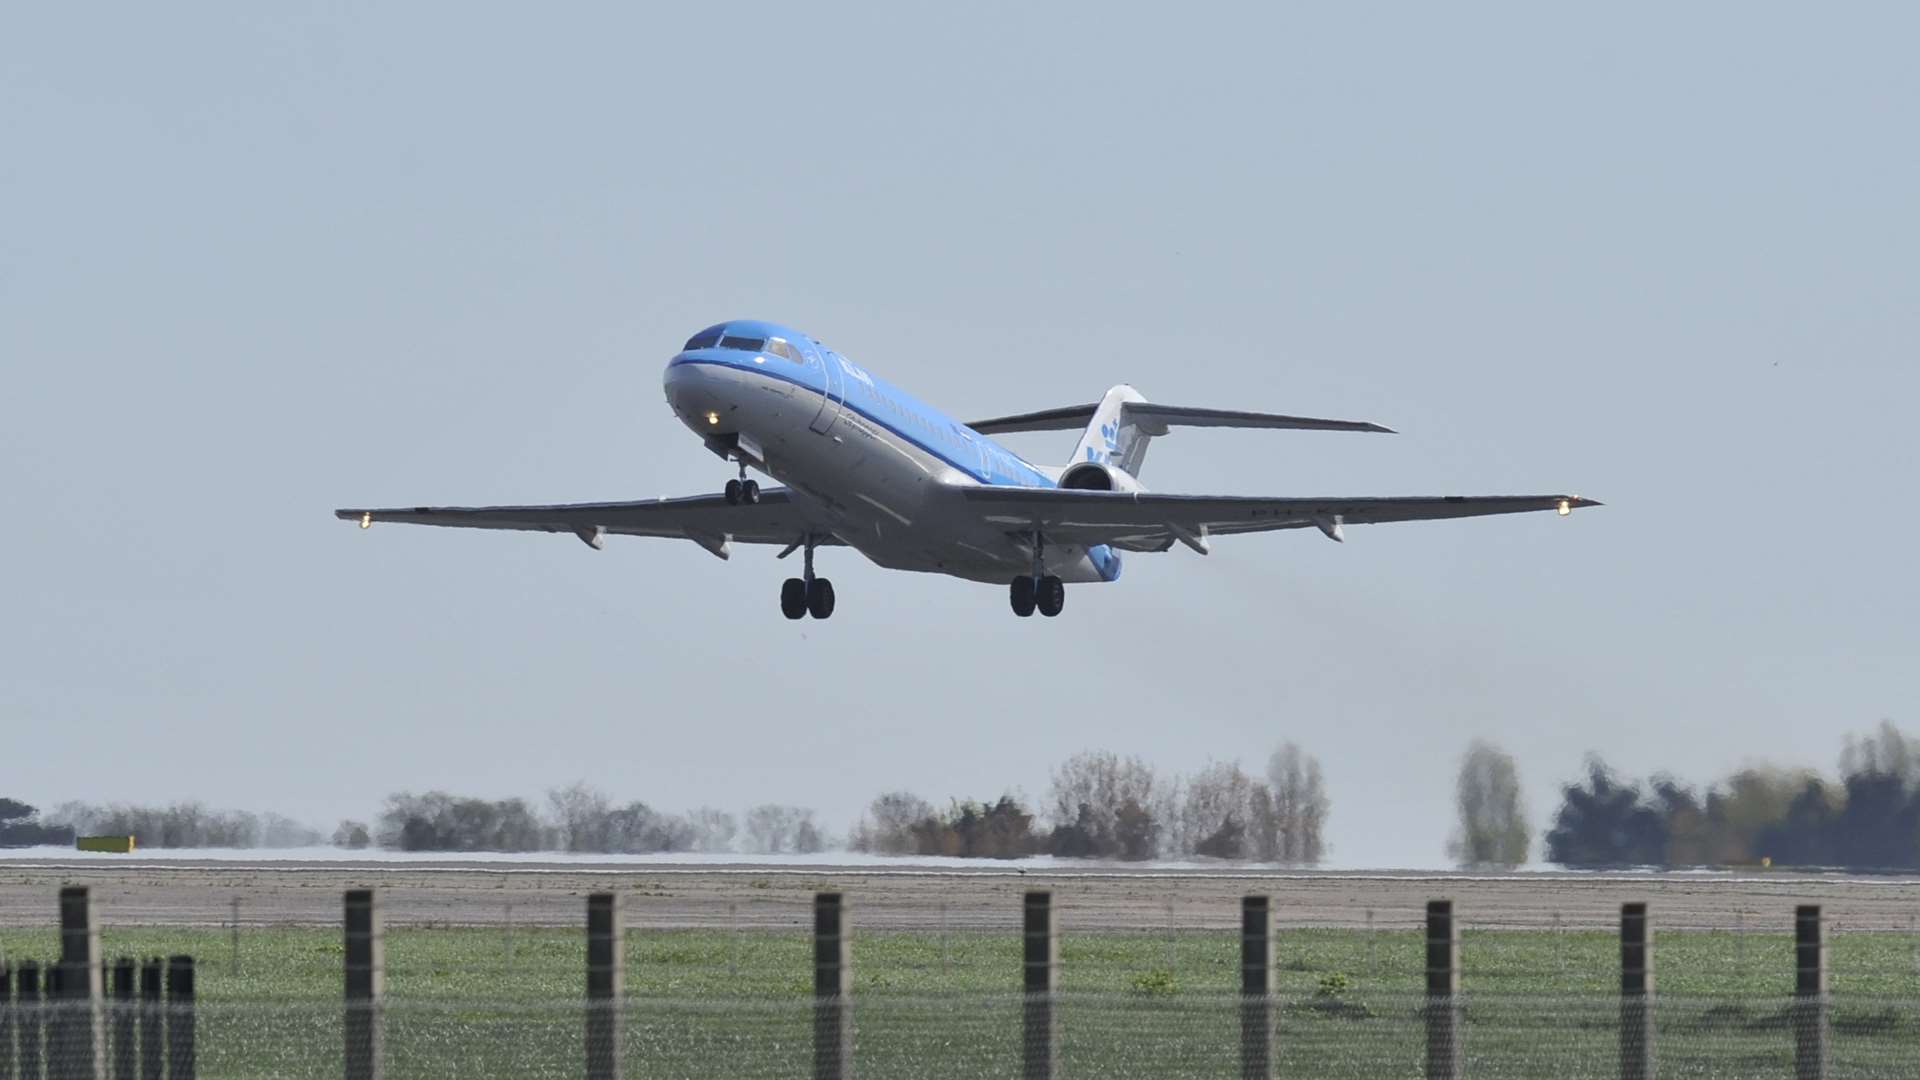 The last KLM passenger flight leaving Manston airport in 2014. Picture: Tony Flashman